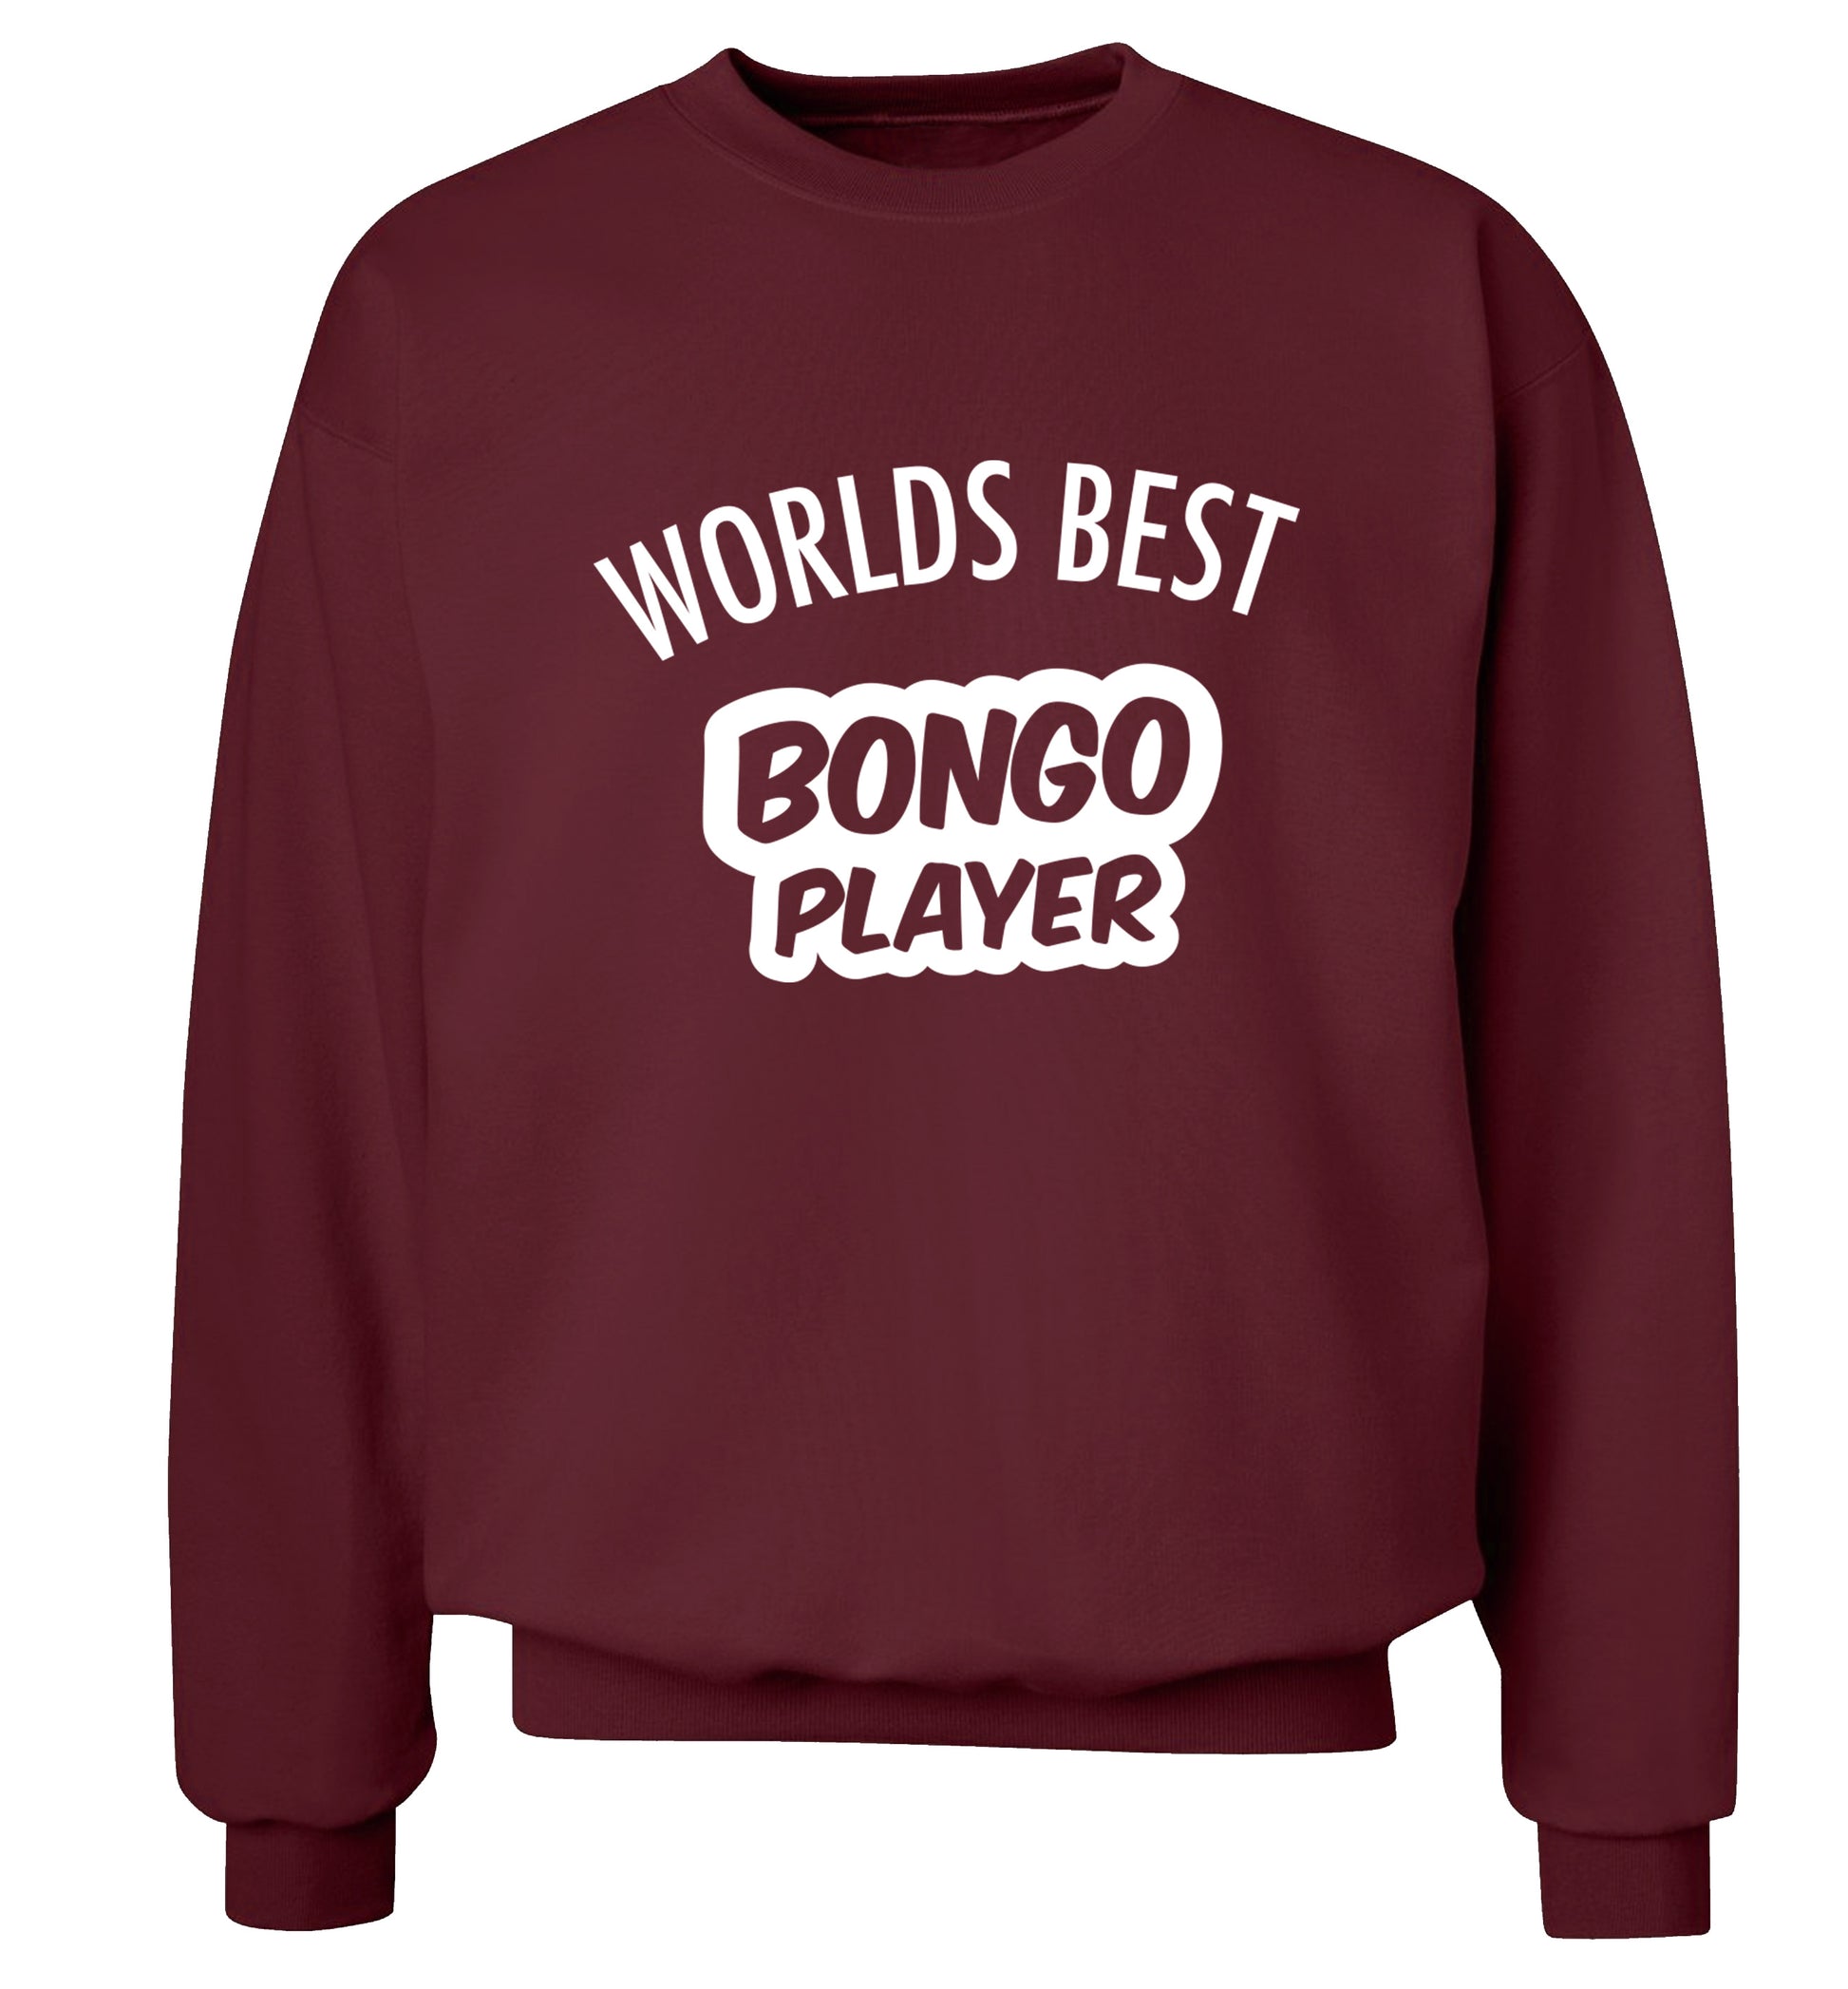 Worlds best bongo player Adult's unisex maroon Sweater 2XL